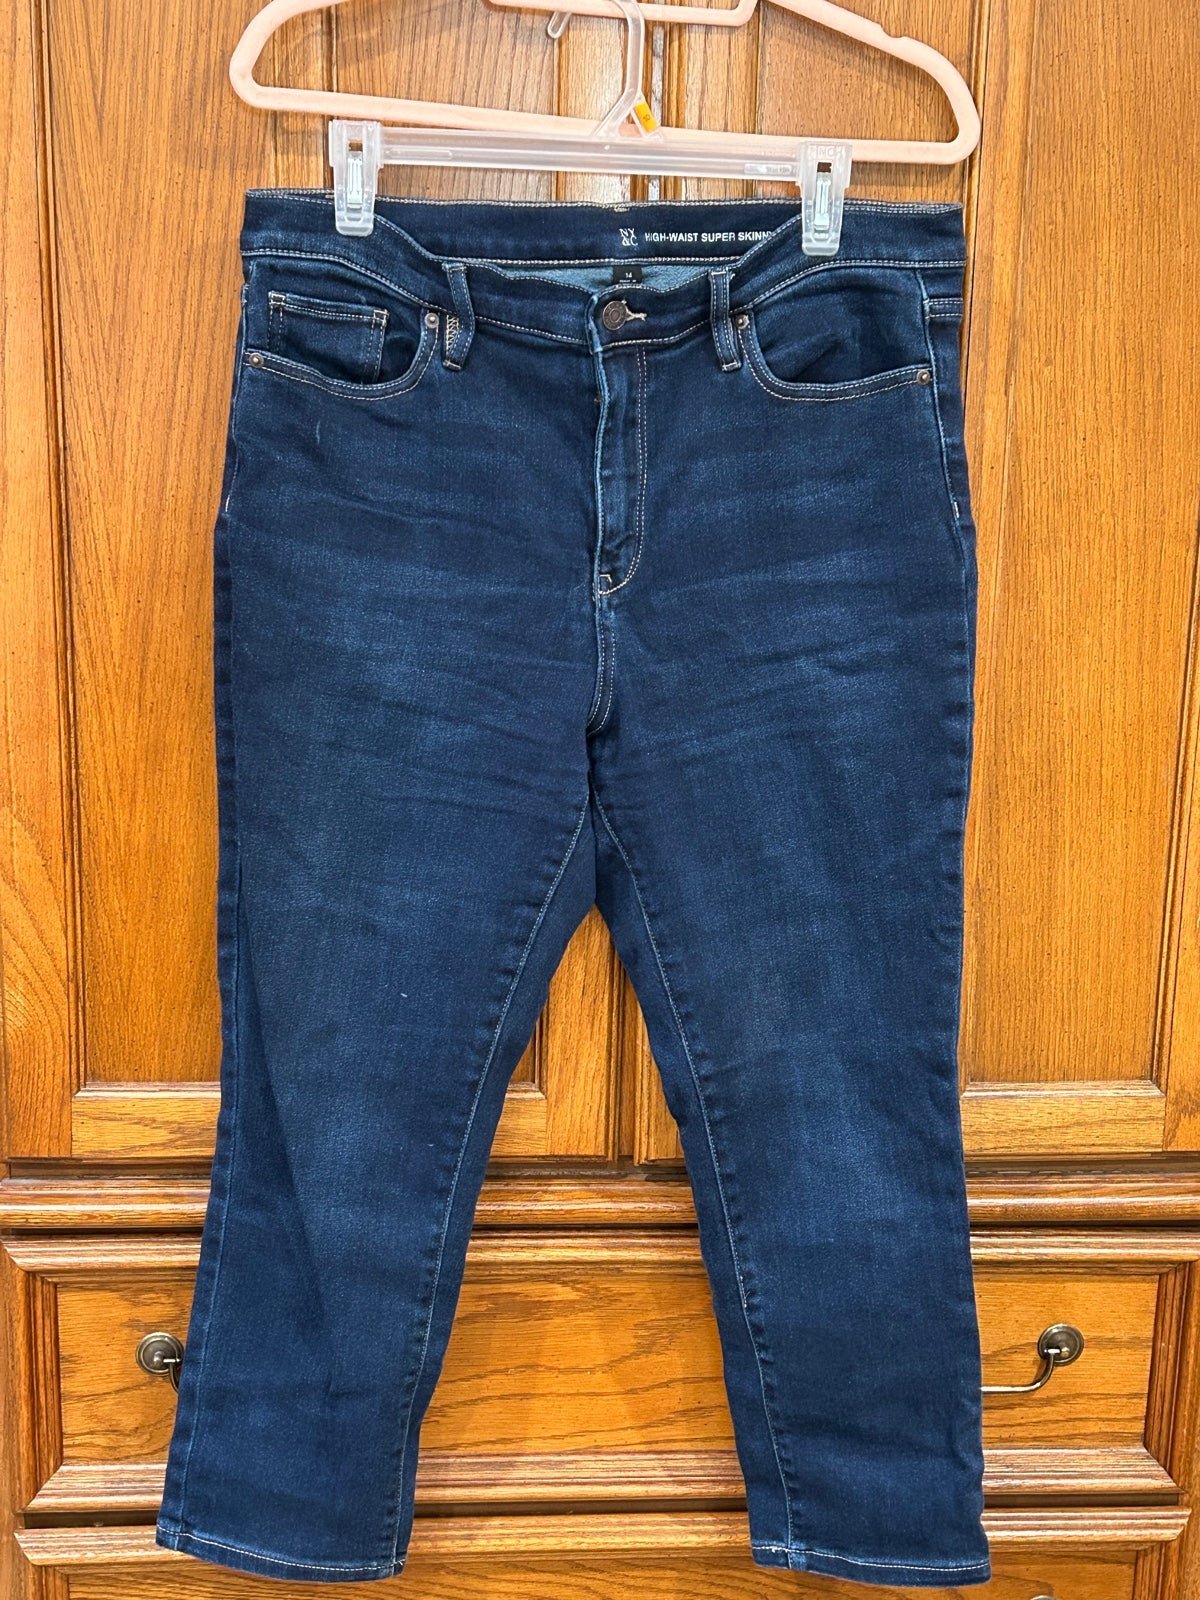 large discount NY&Co Capri Skinny Jeans14 IDPHHWZ2B Out